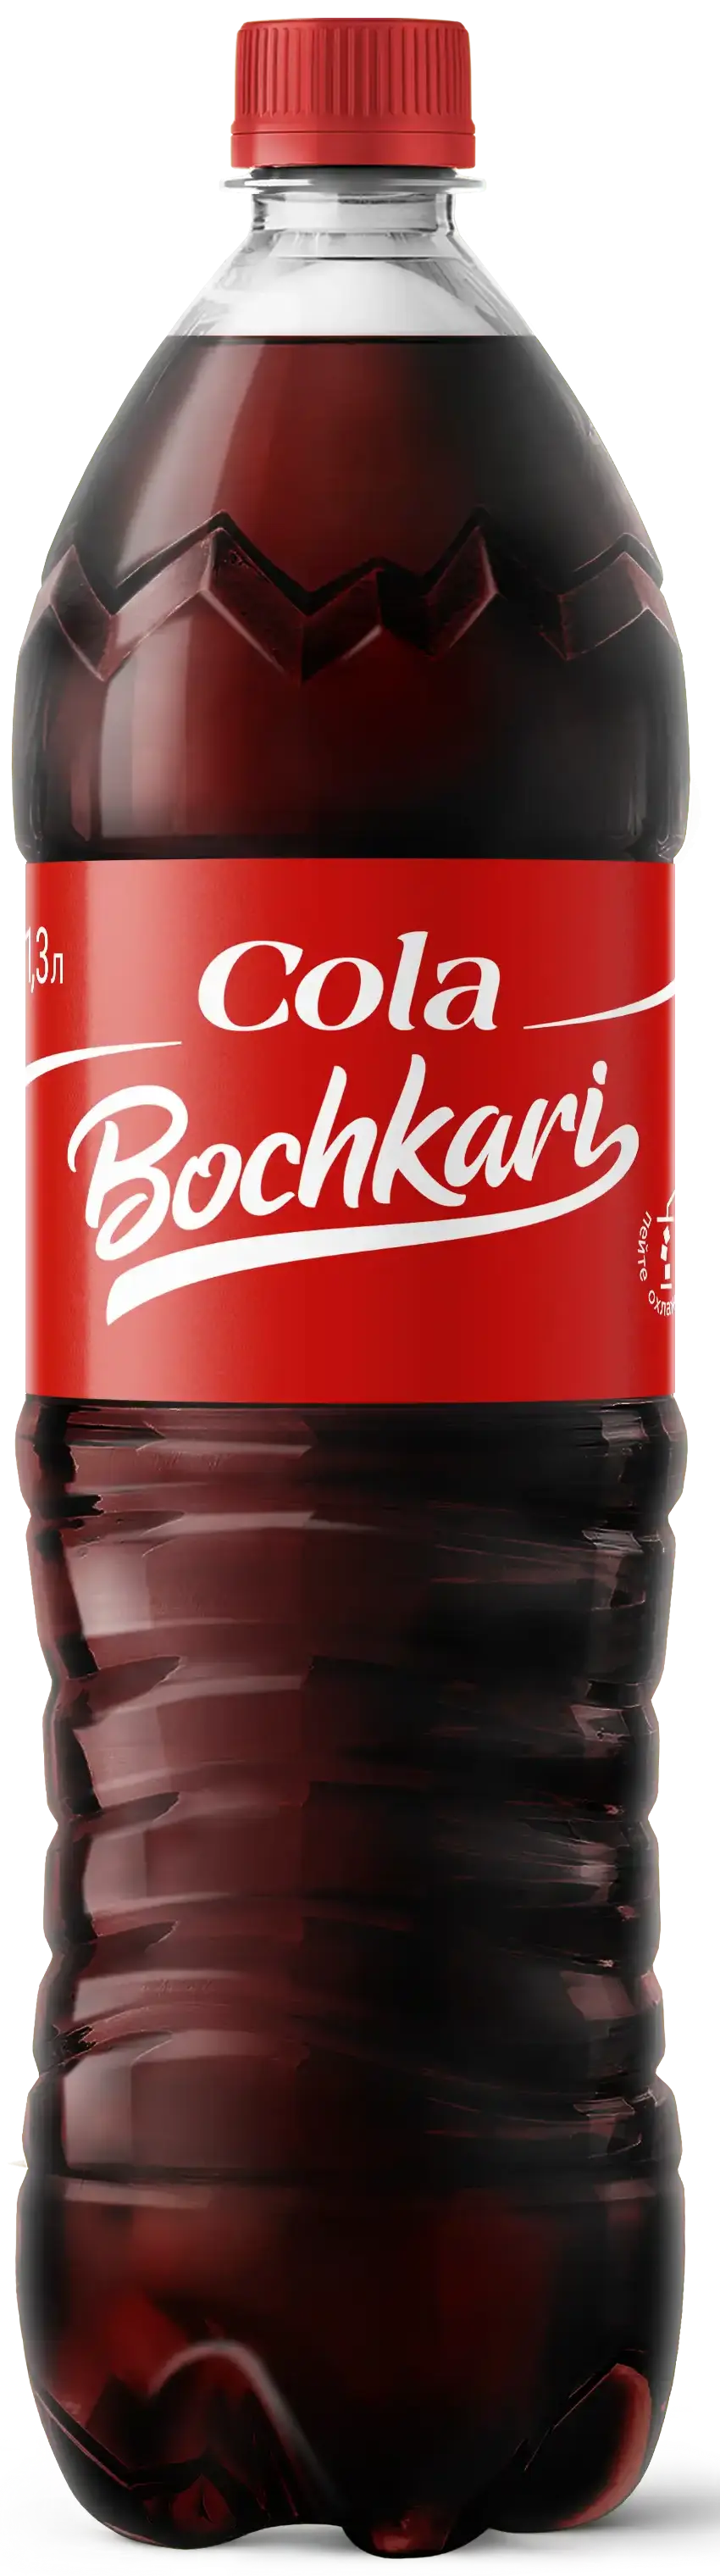 Напиток Кола Бочкари